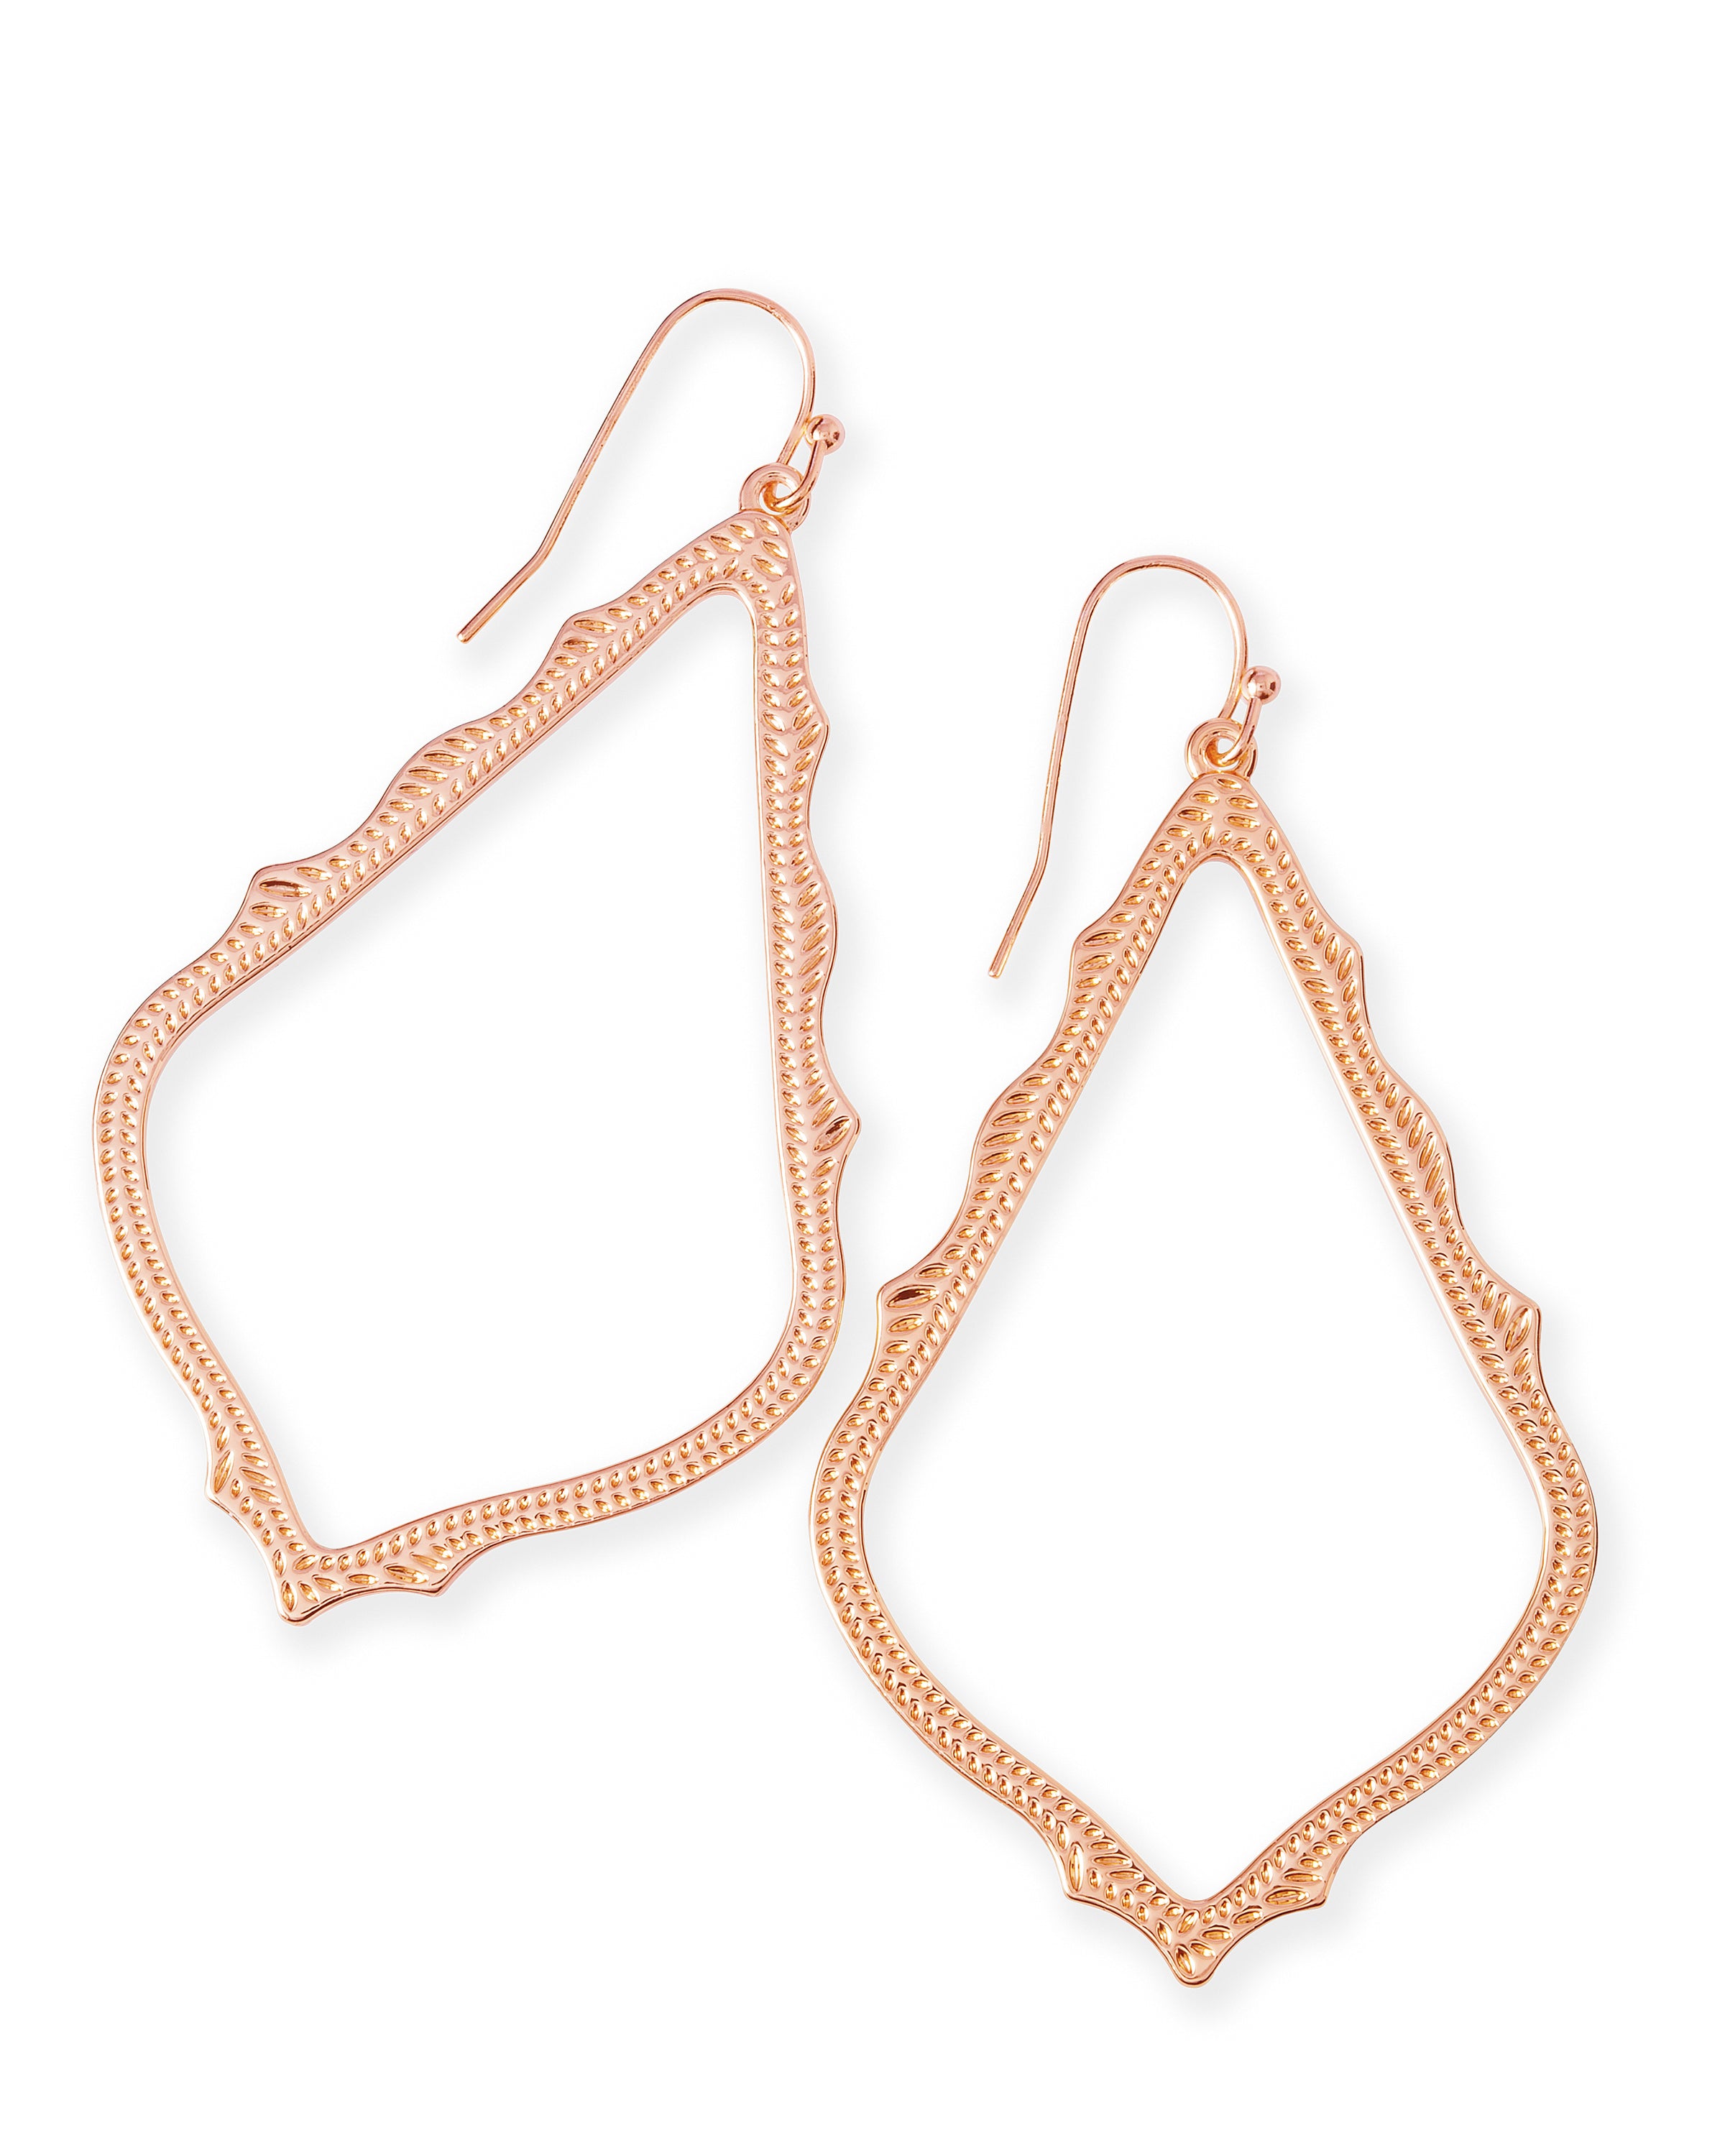 Kendra Scott | Sophee Drop Earrings in Rose Gold - Giddy Up Glamour Boutique